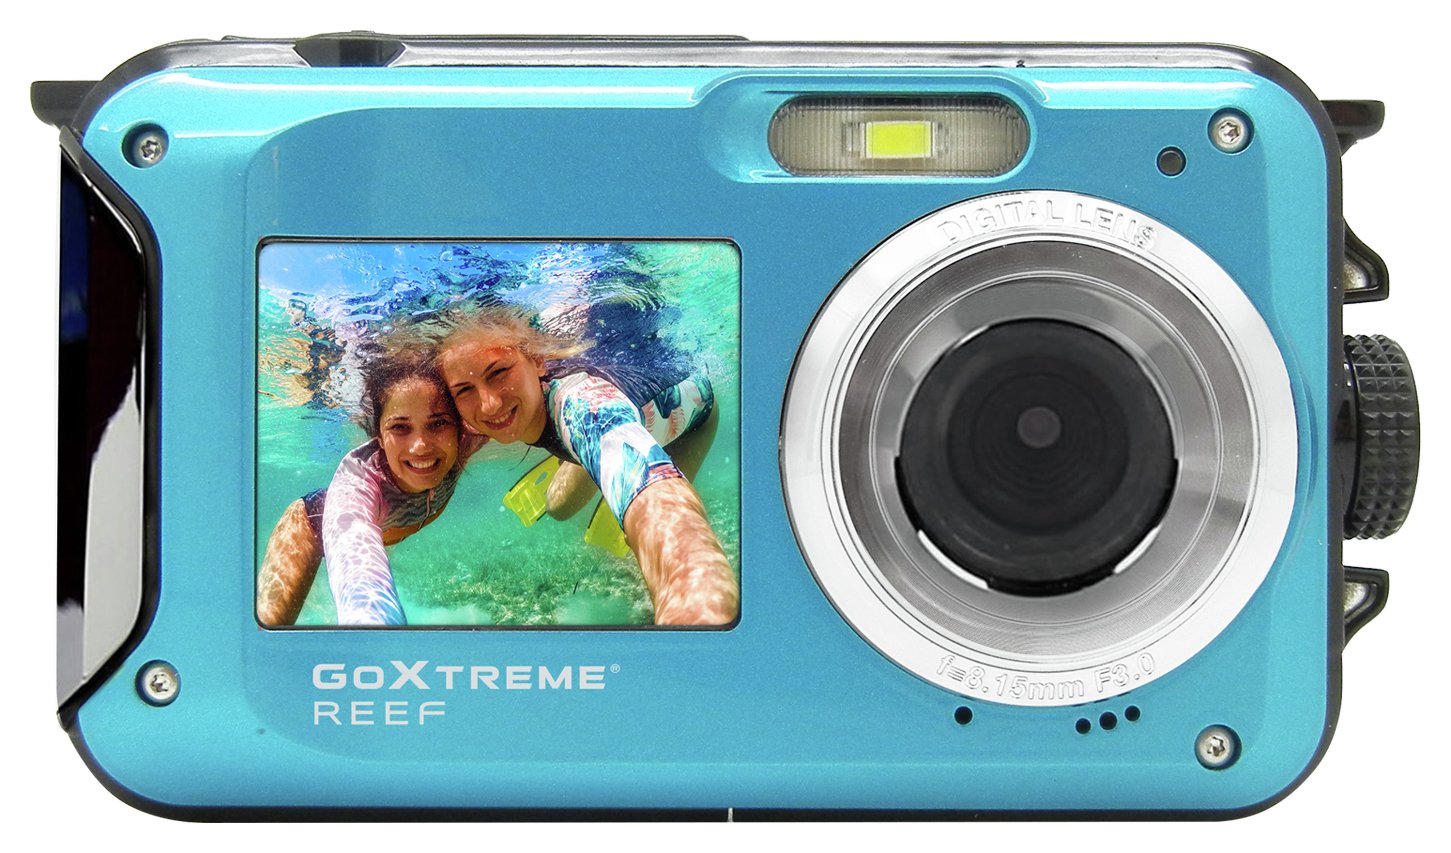 GoXtreme Reef 20MP 720P Waterproof Camera - Blue